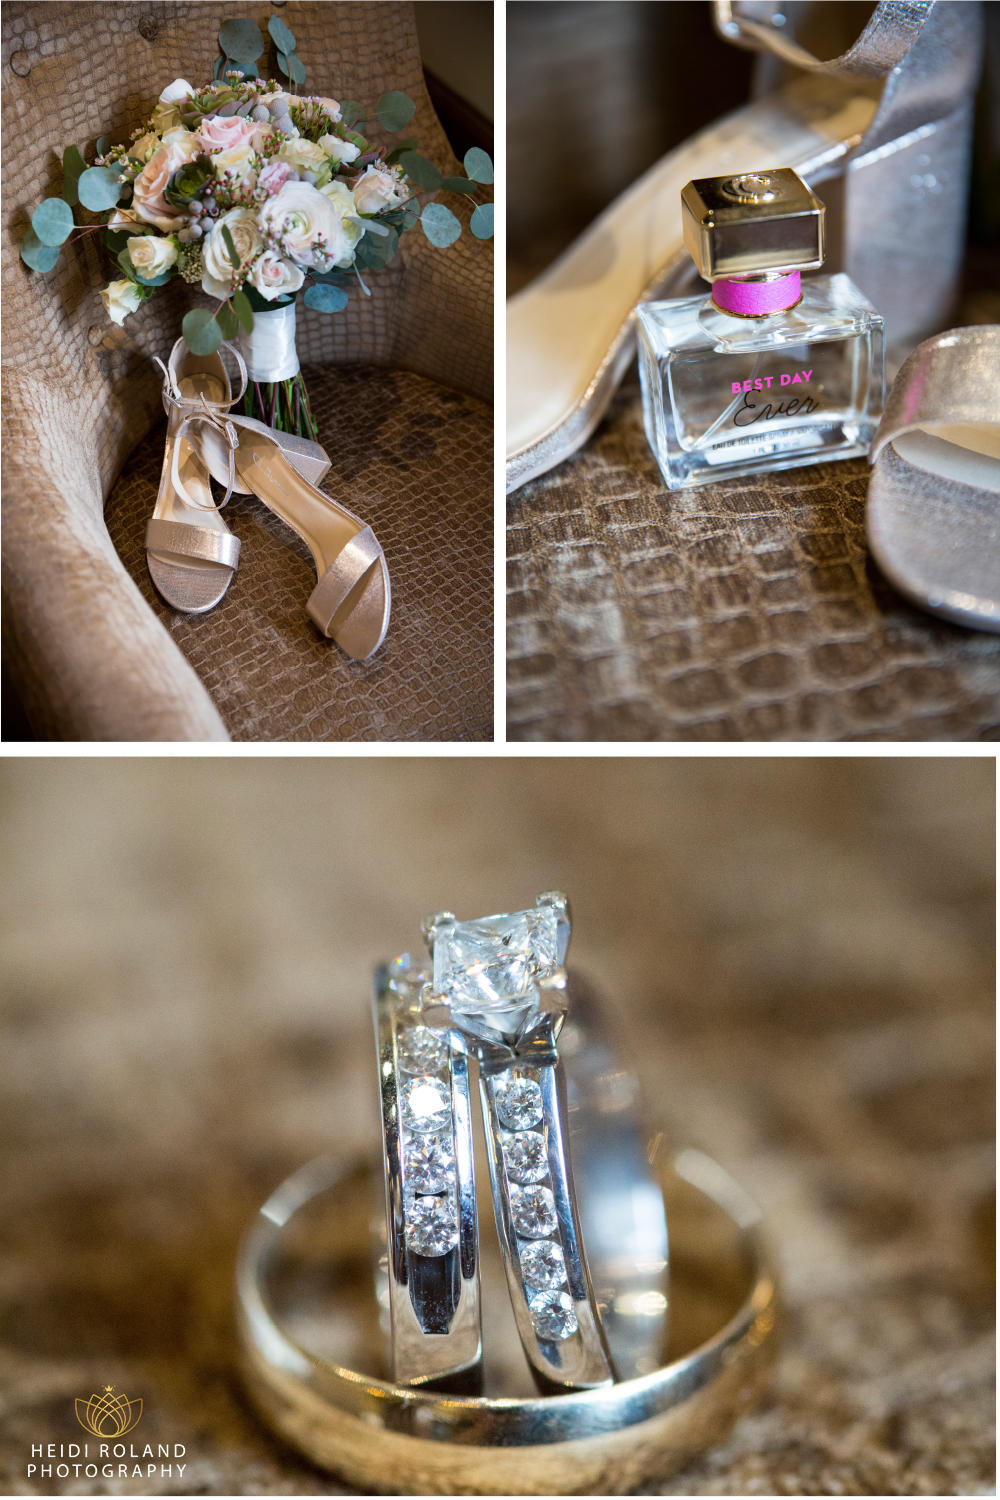 Bridal details, rings, perfume, flowers, The Inn at Leola Village Wedding, 